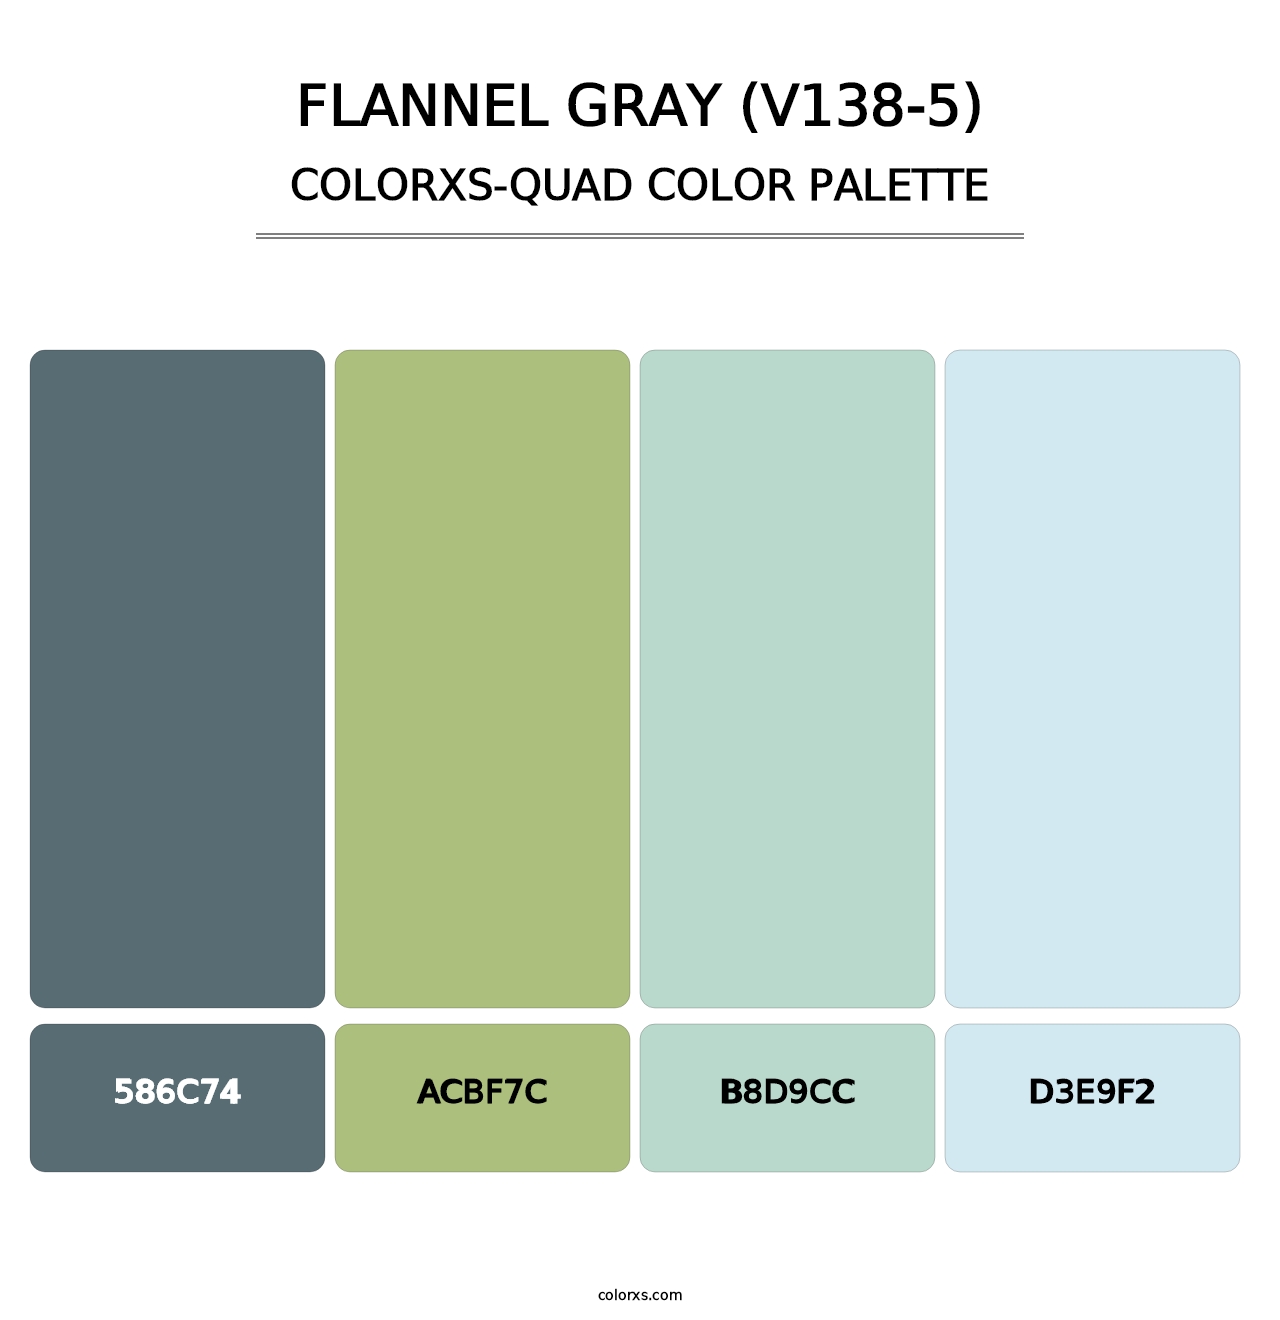 Flannel Gray (V138-5) - Colorxs Quad Palette